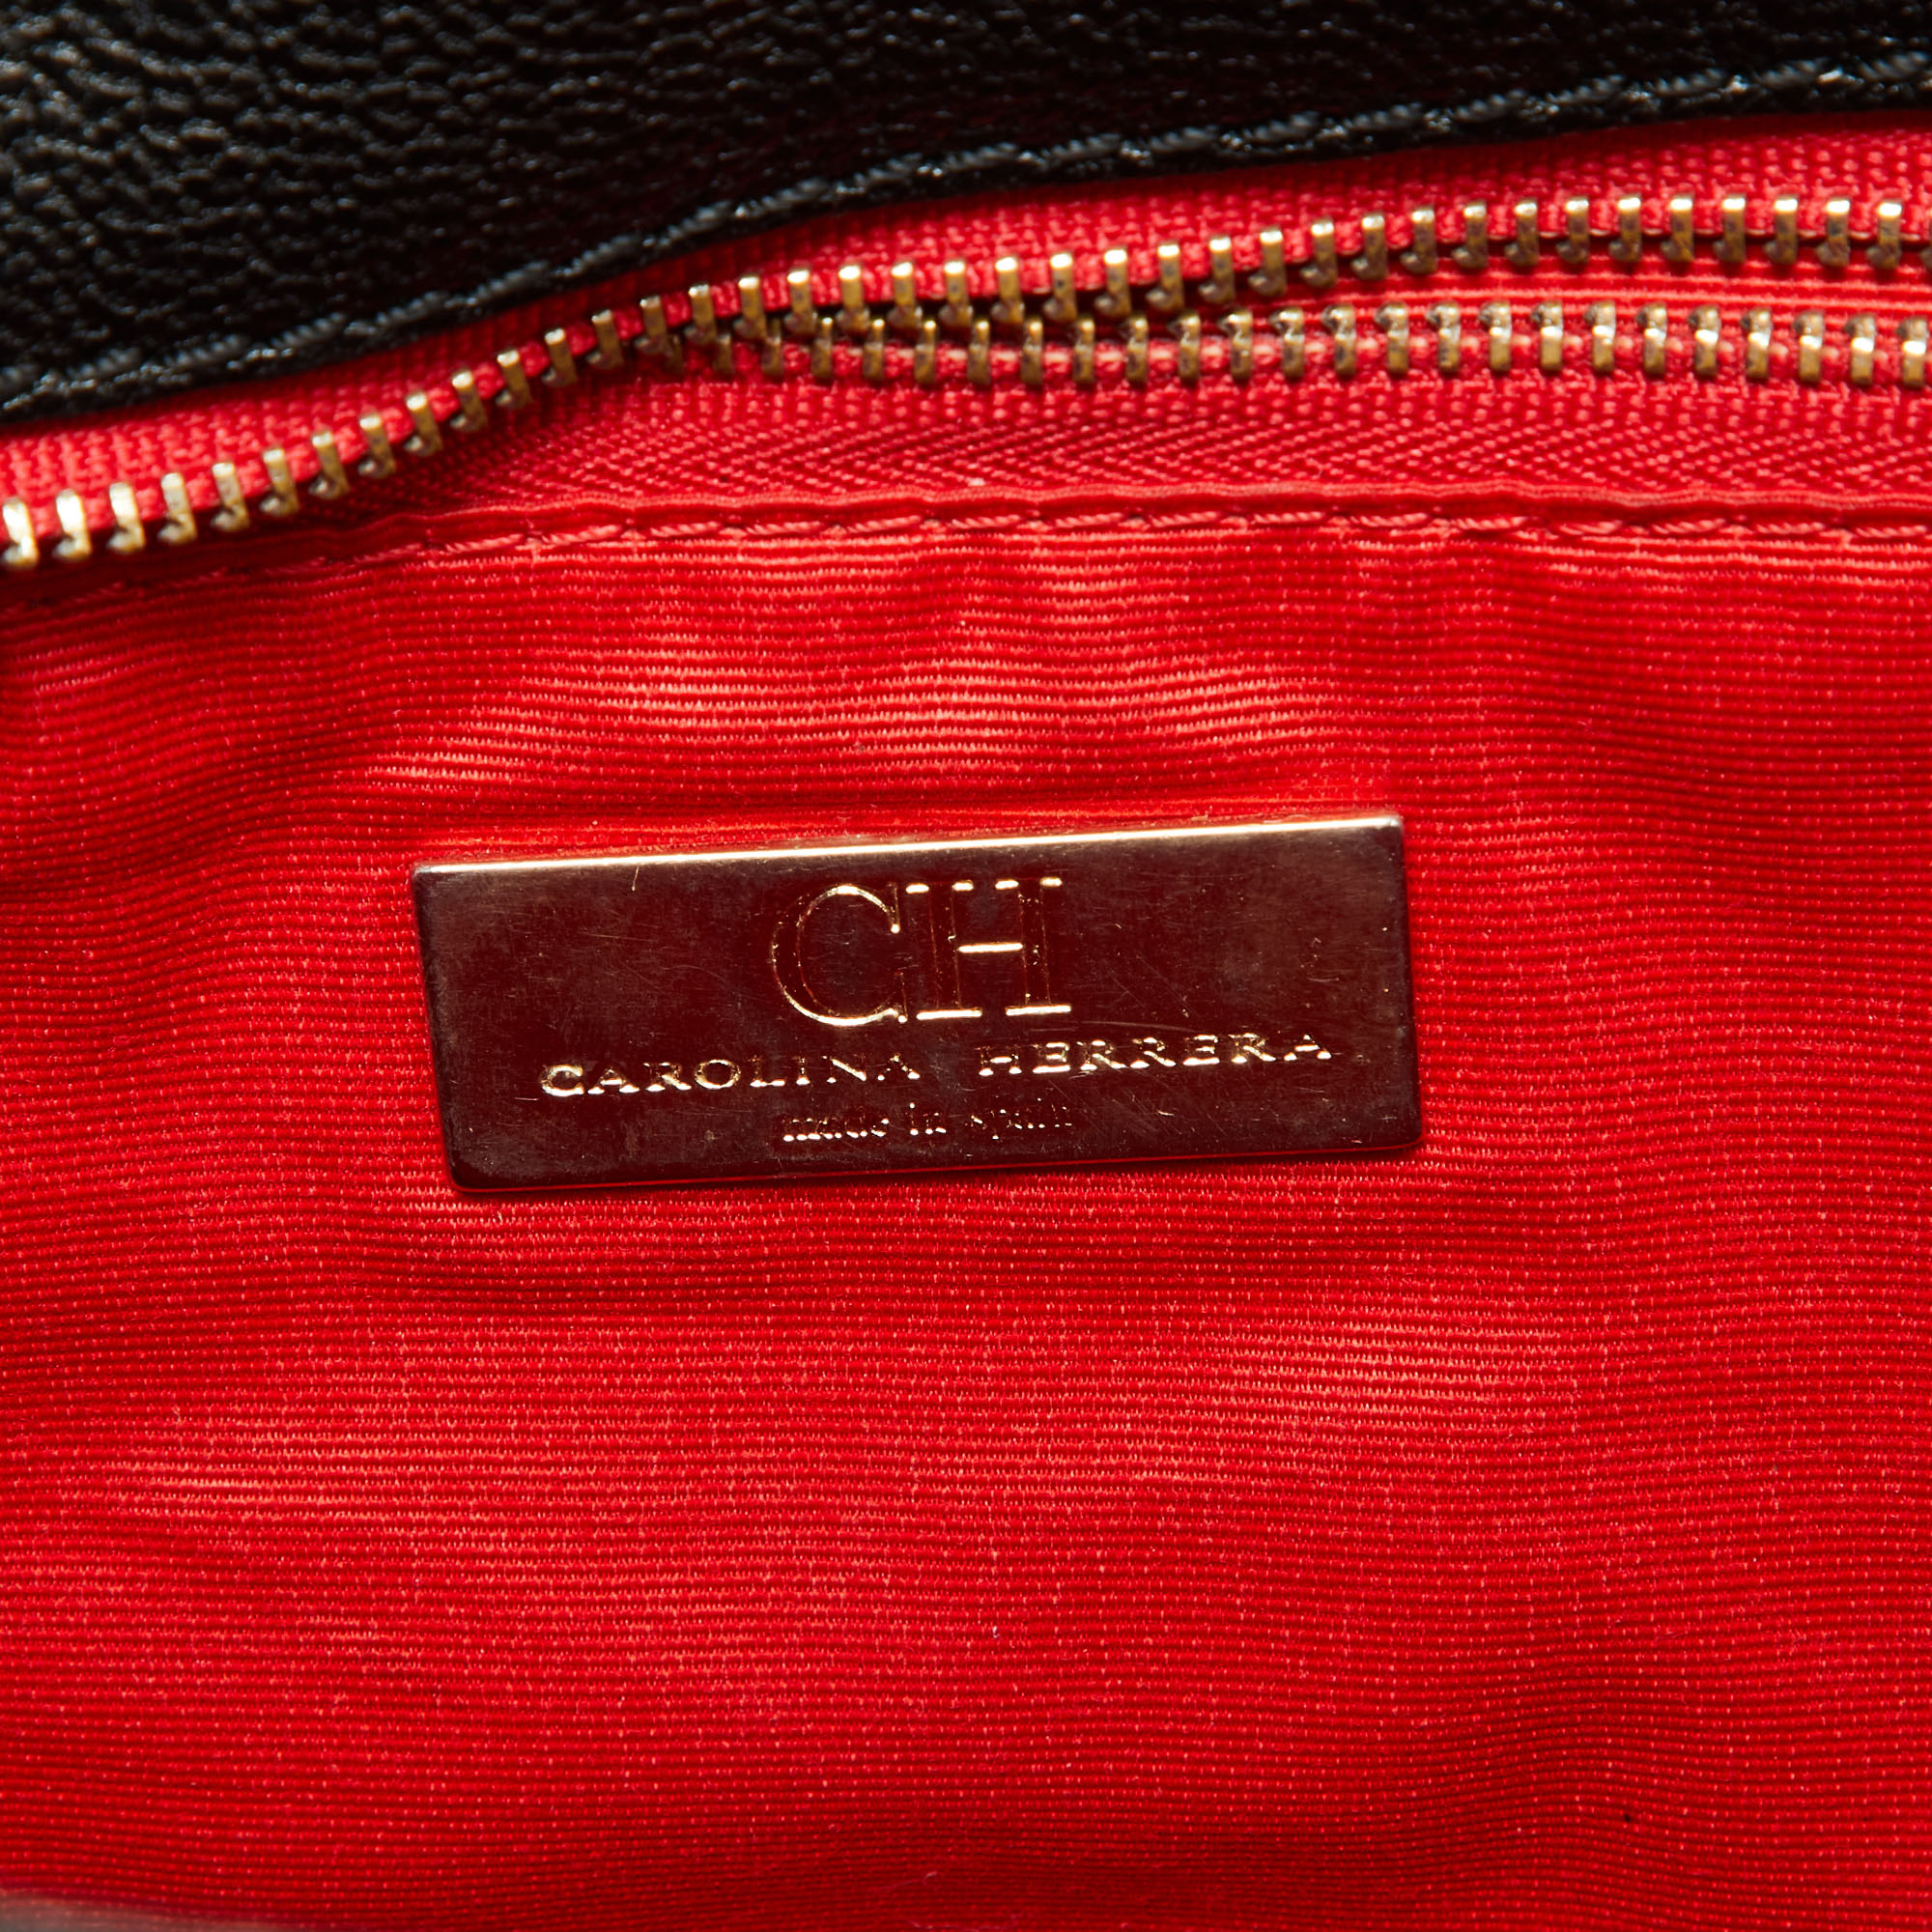 Carolina Herrera Black CH Embossed Leather Flap Chain Bag